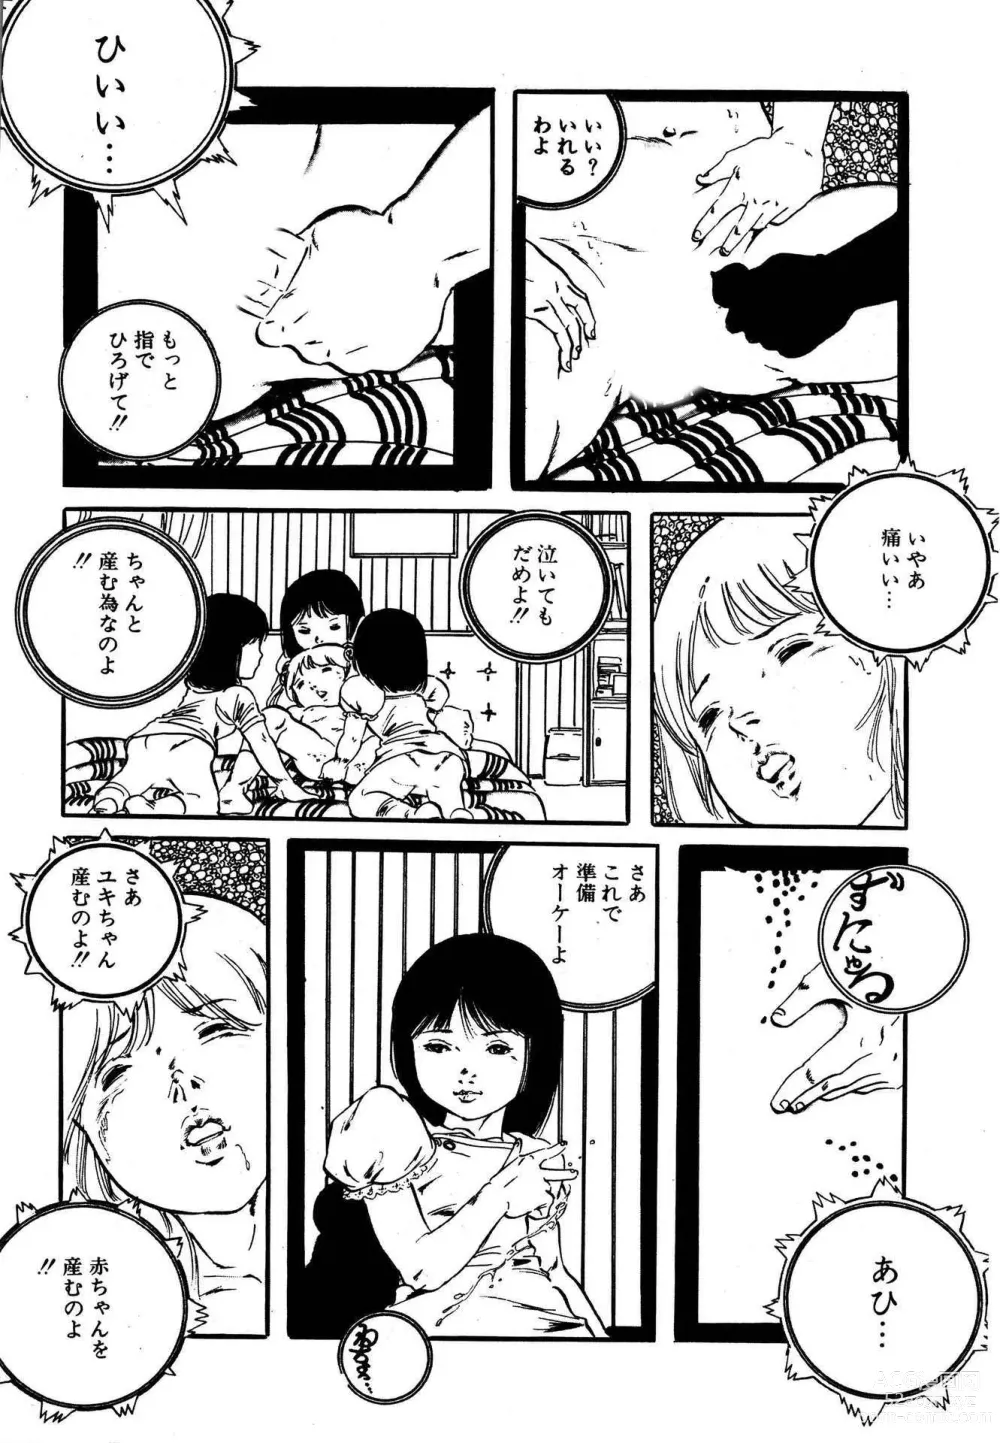 Page 190 of manga Dreaming fairy